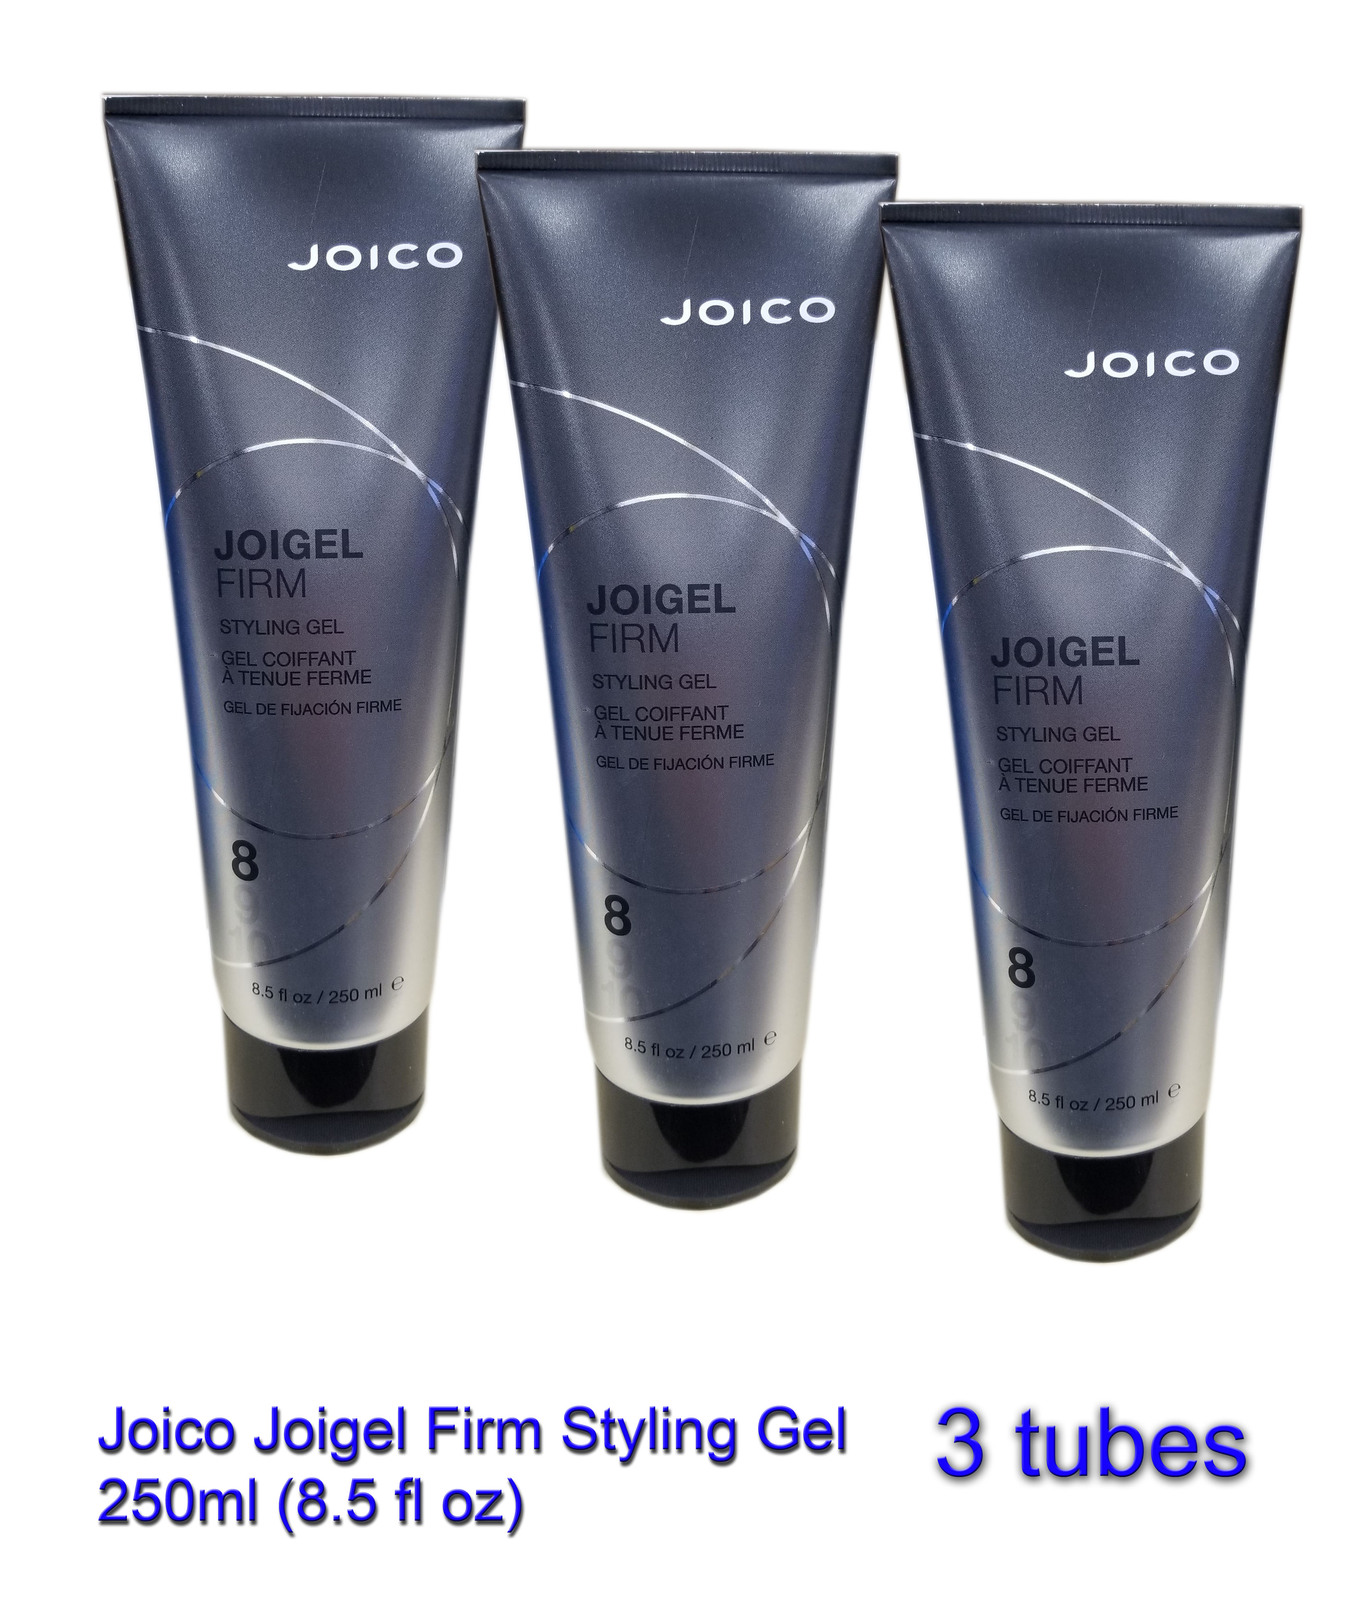 JOICO JOIGEL FIRM Hair gel #8 250ml 8.5 fl oz x 3 tubes - $61.90